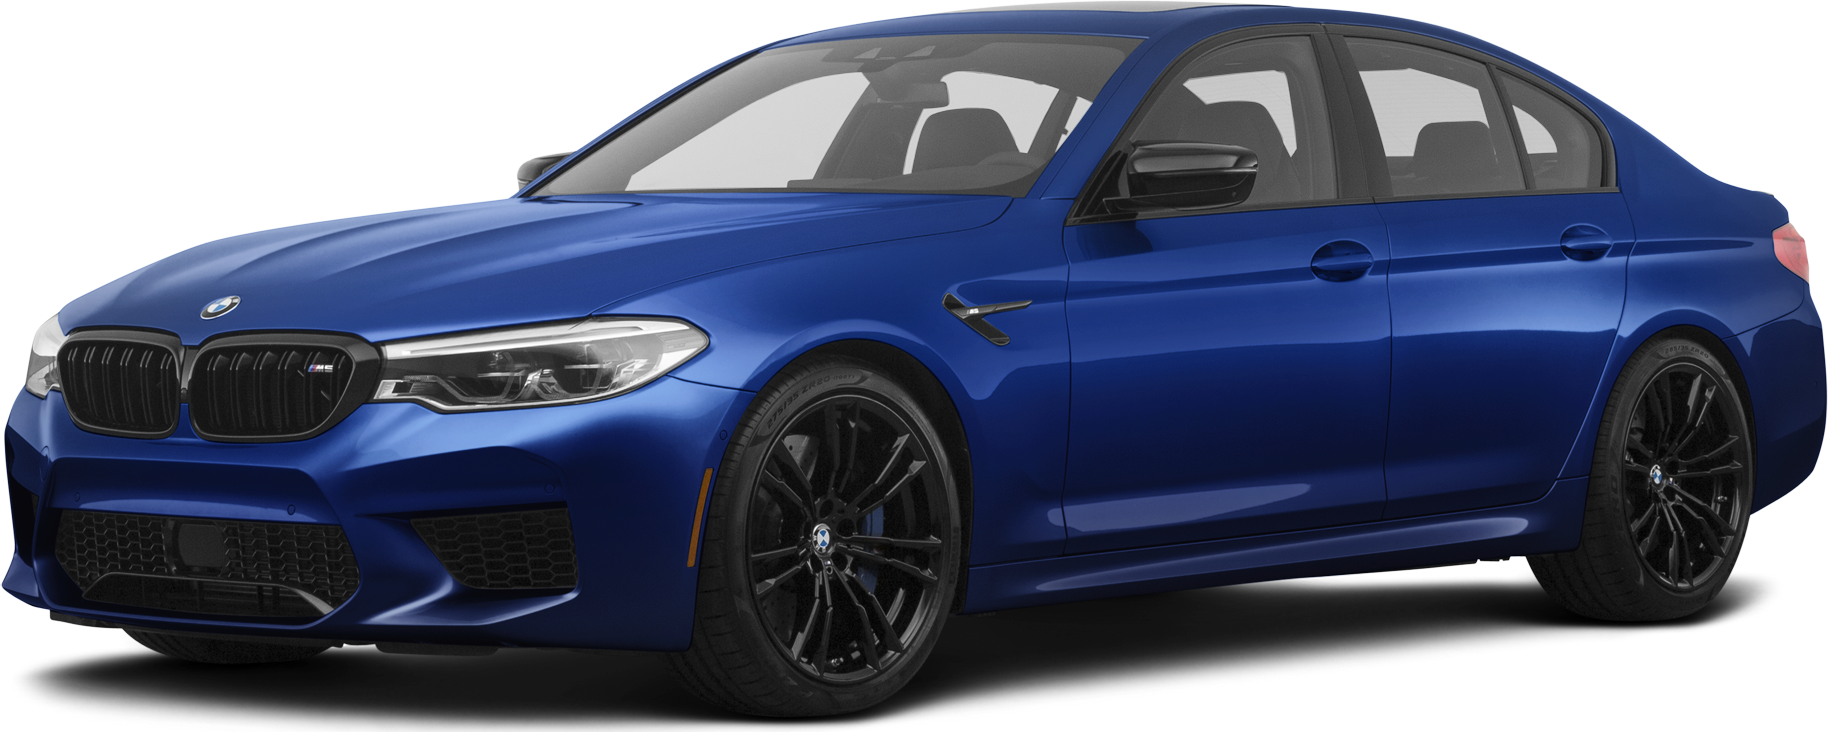 2020 BMW M5 Reviews, Pricing & Specs | Kelley Blue Book